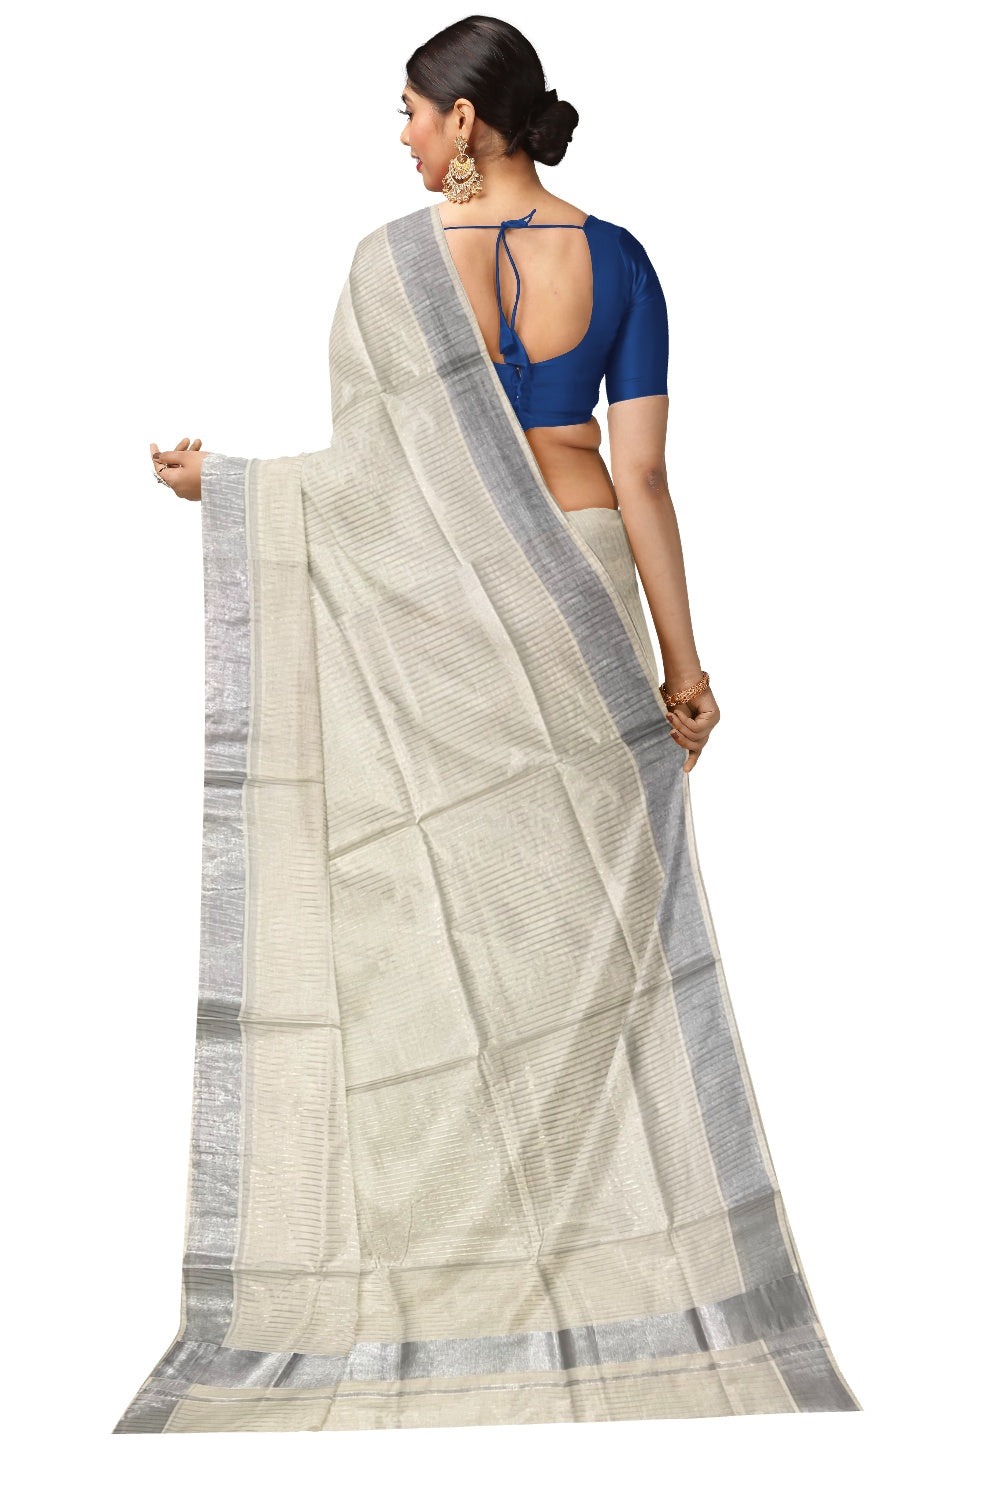 Buy Southloom Women's Pure Cotton Kerala Saree with 2x2 Silver Kasavu Border  at Amazon.in